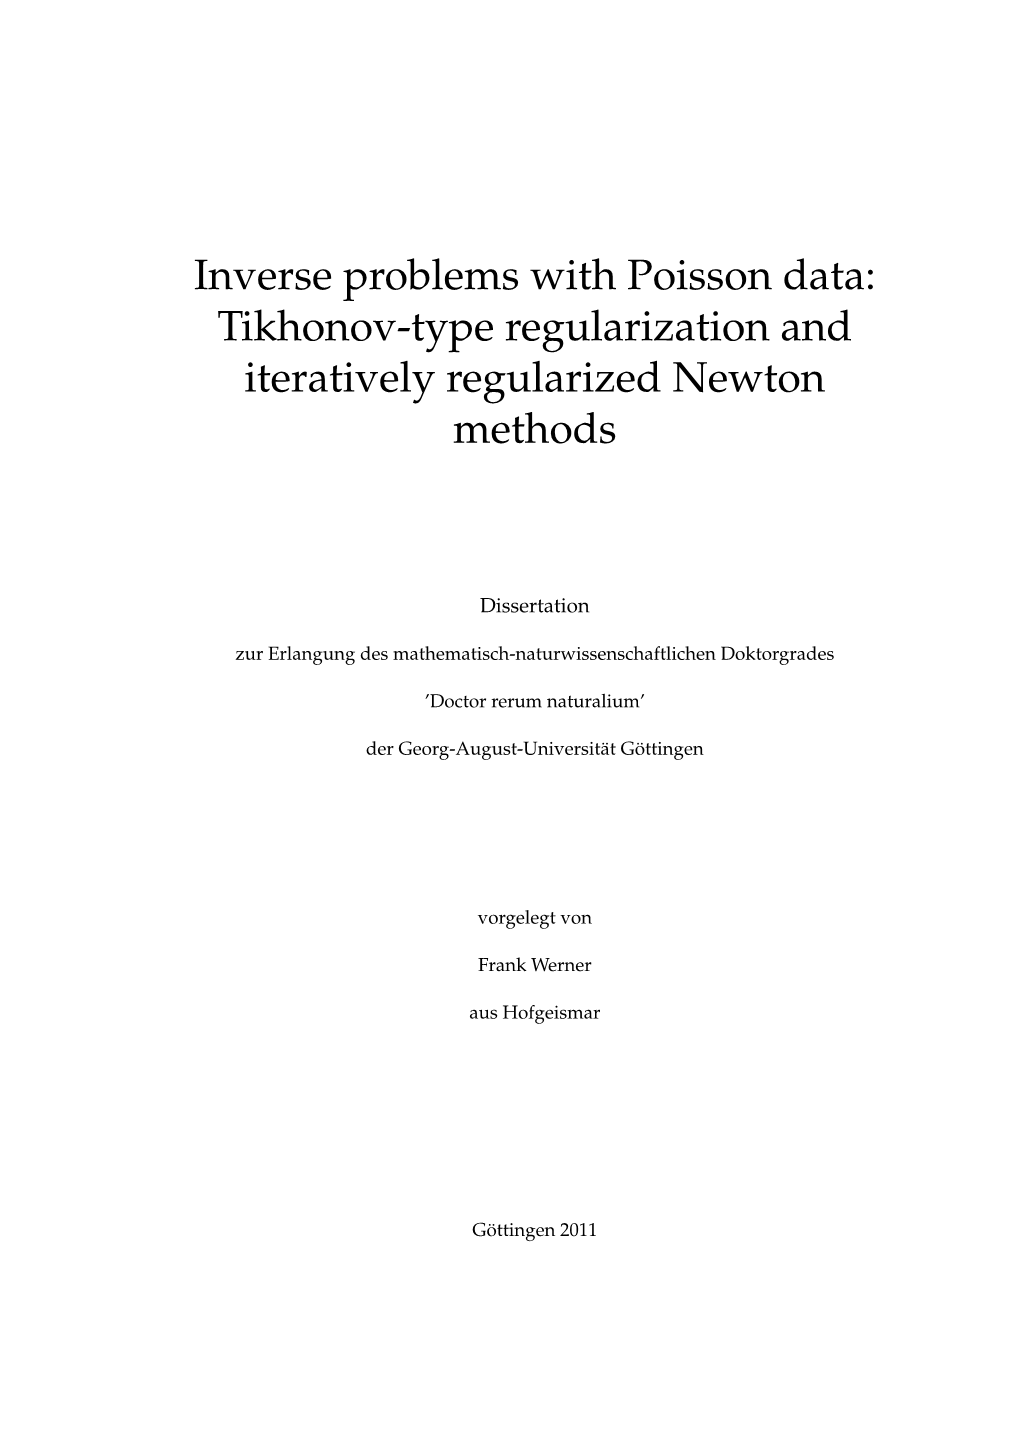 Inverse Problems with Poisson Data: Tikhonov-Type Regularization and Iteratively Regularized Newton Methods